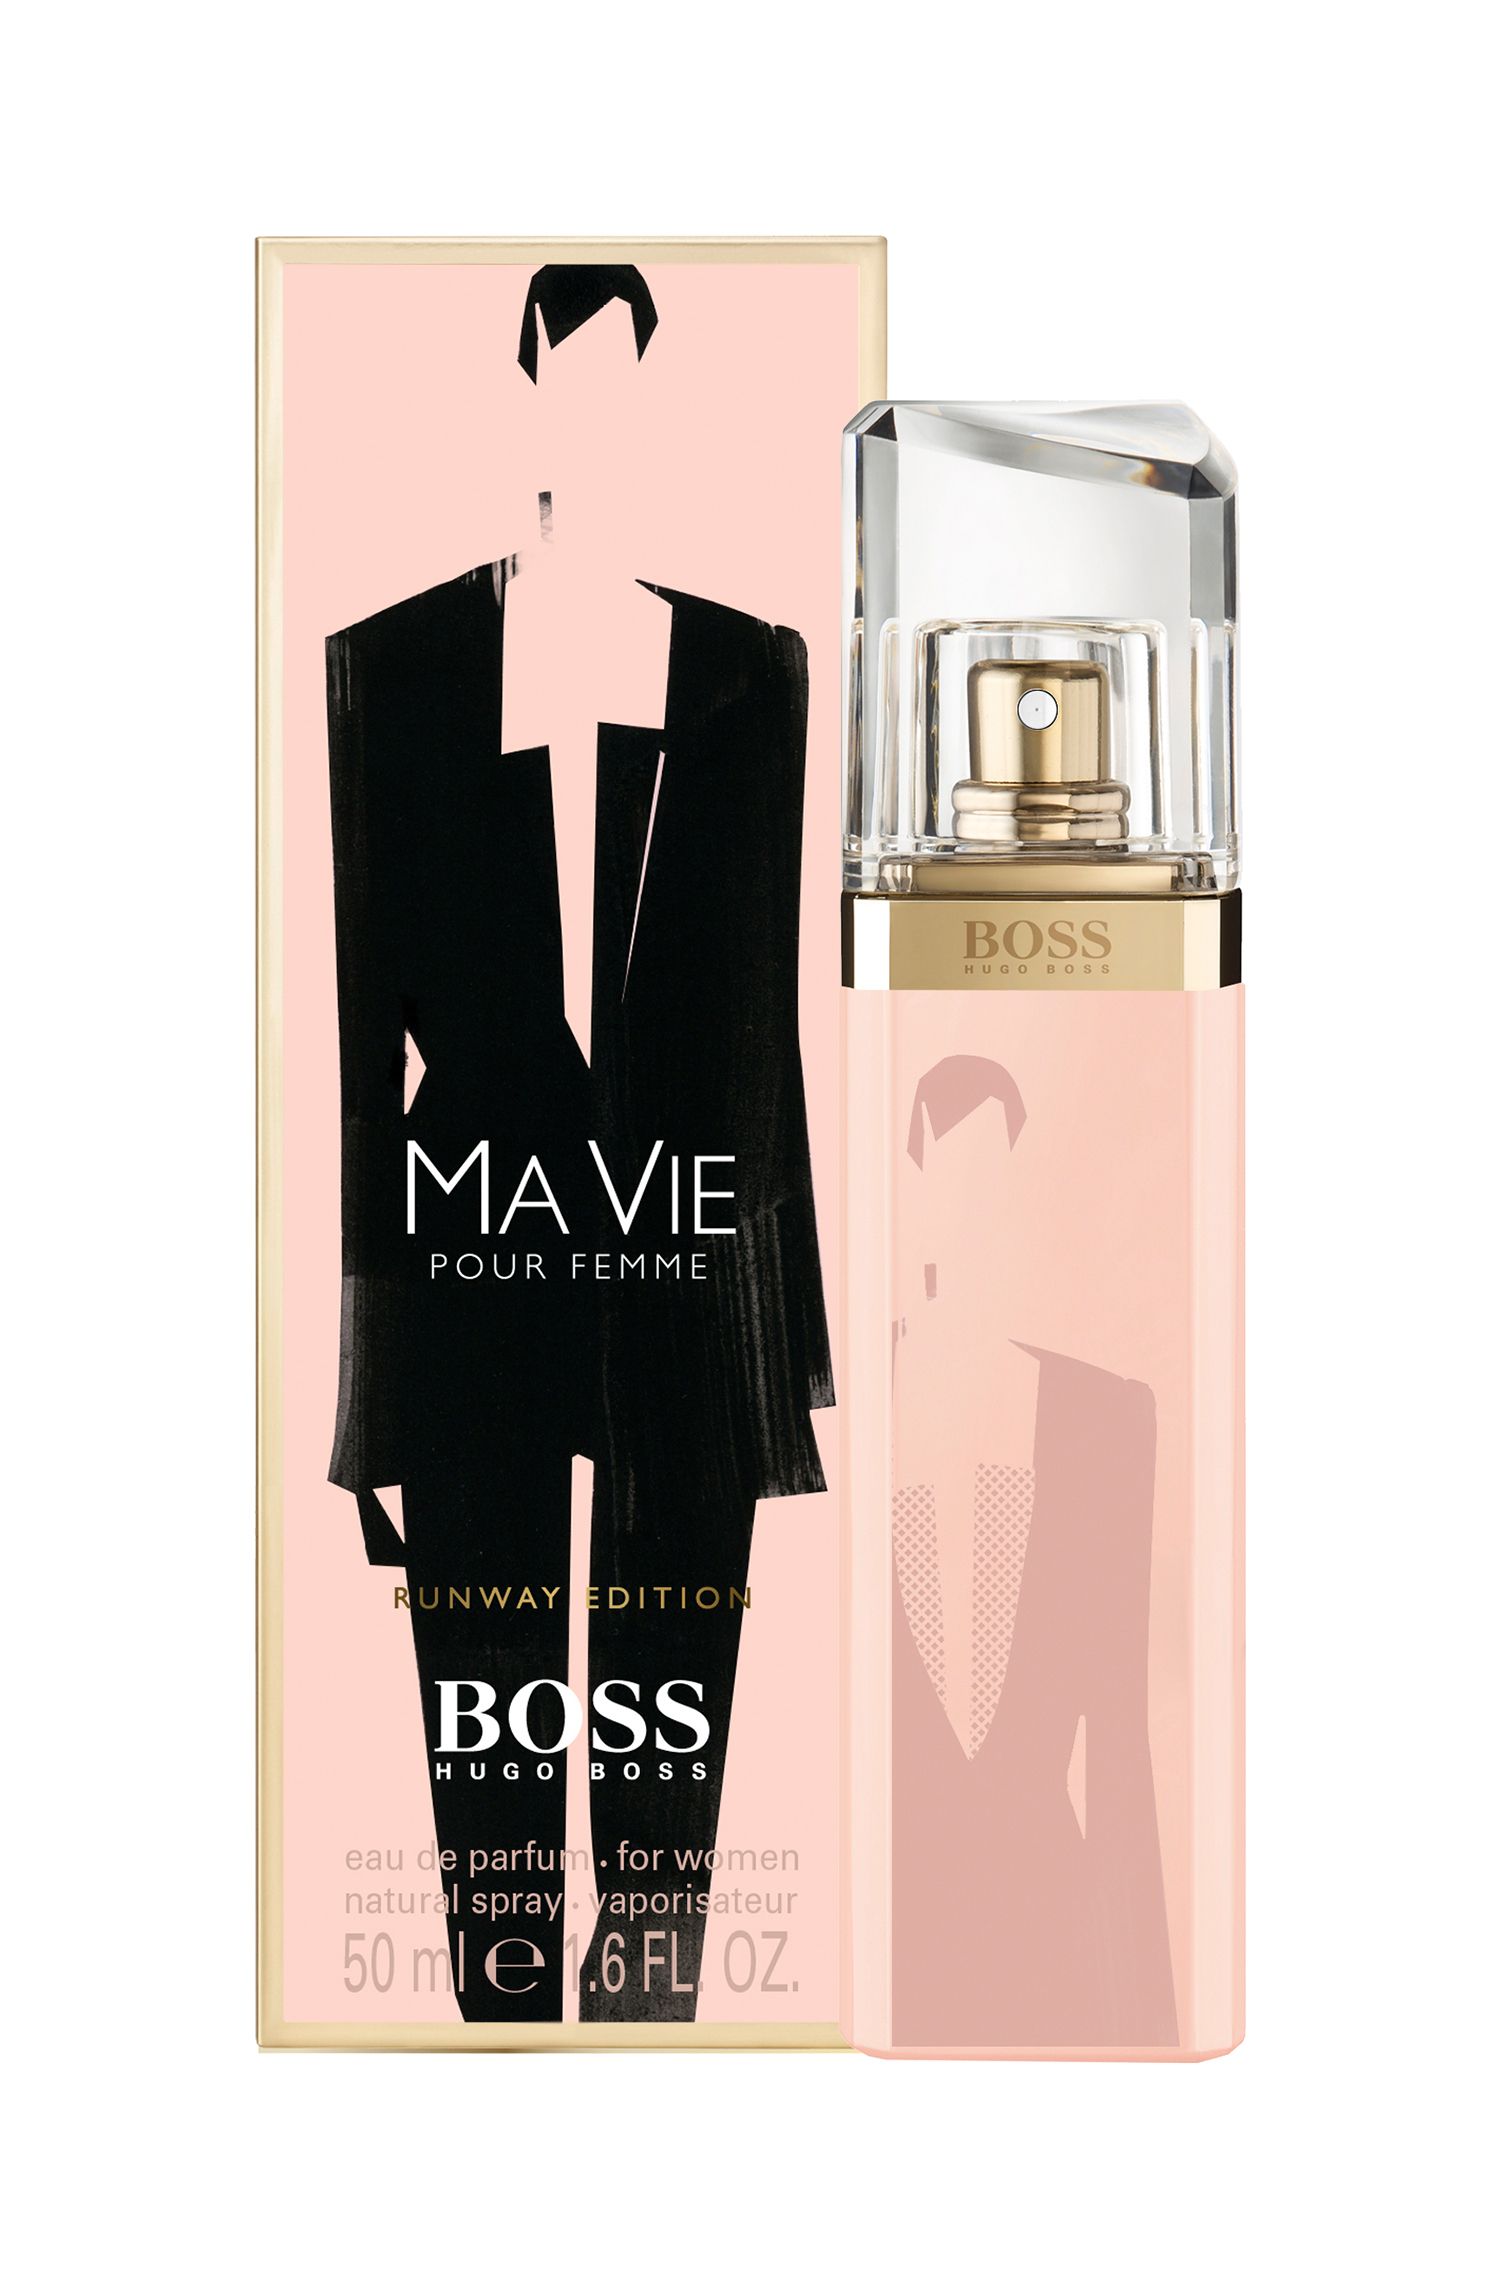 Hugo Boss Ma Vie Pour Femme Runway Edition